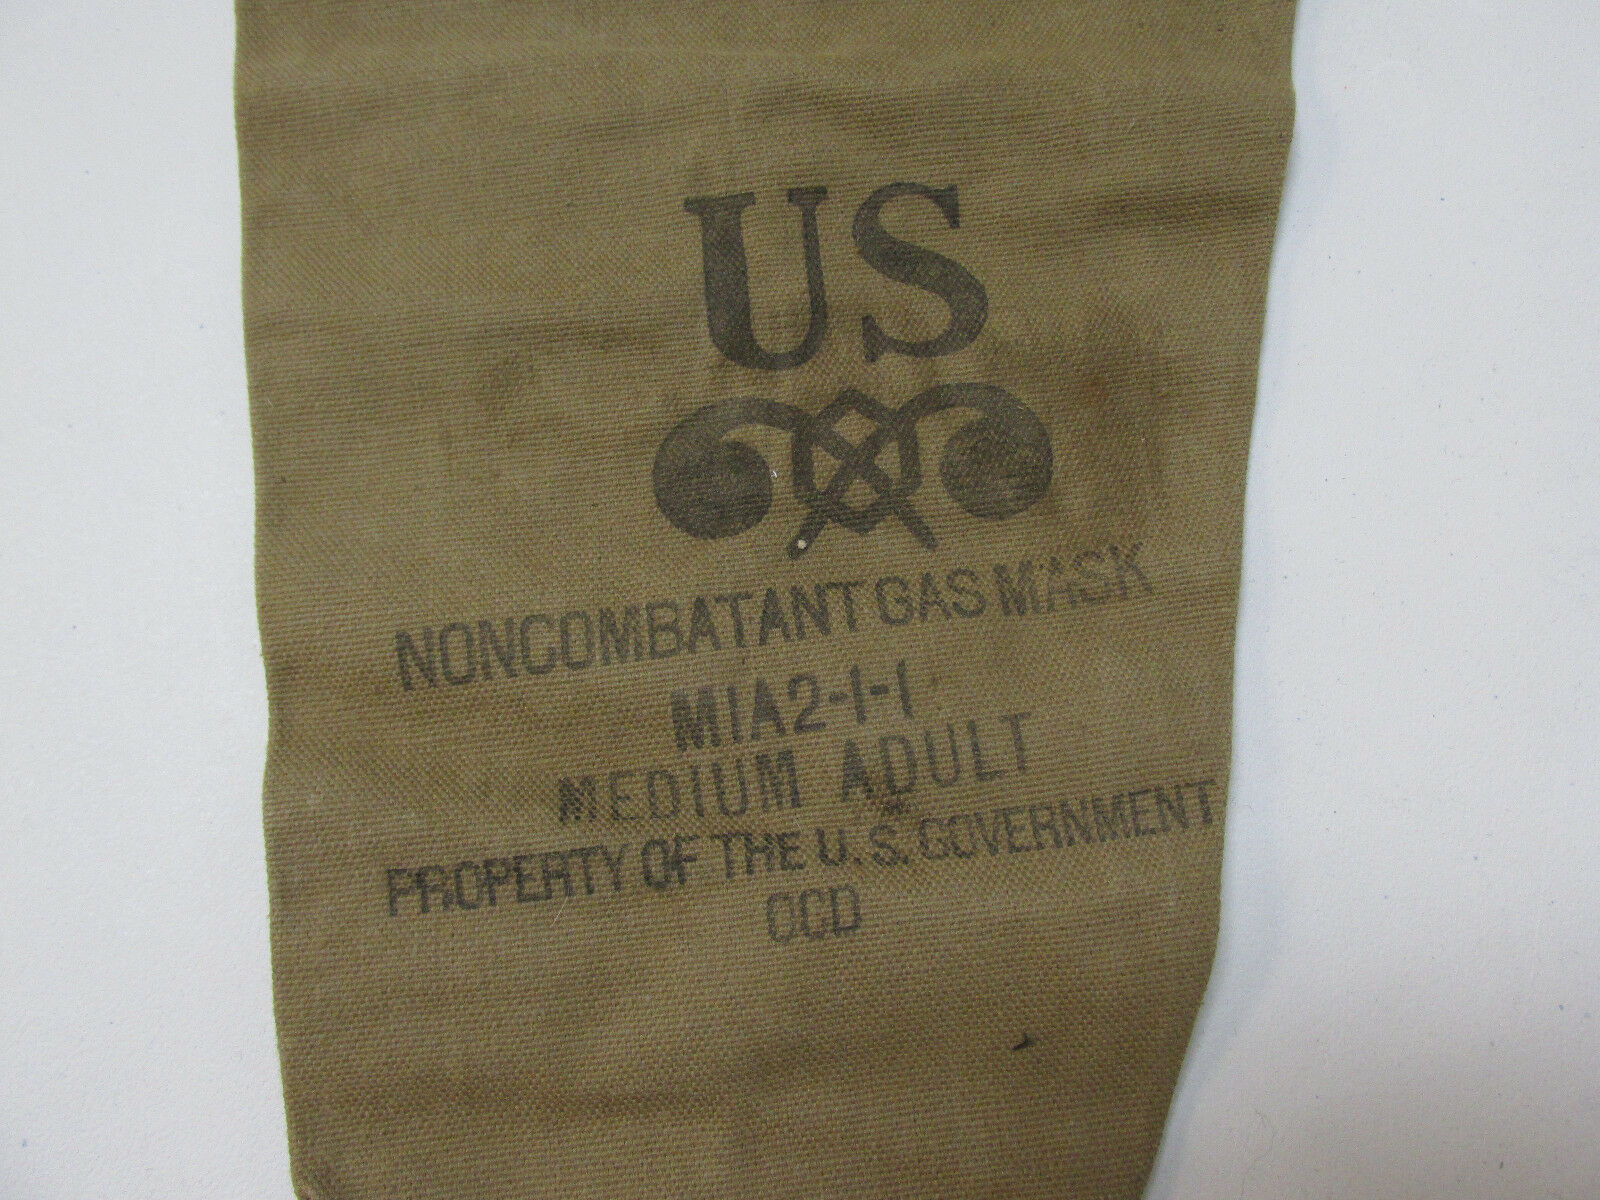 Vintage WWII U.S. NonCombatant Gas Mask Bag M1A2-1-1 -Military Surplus Cloth Bag